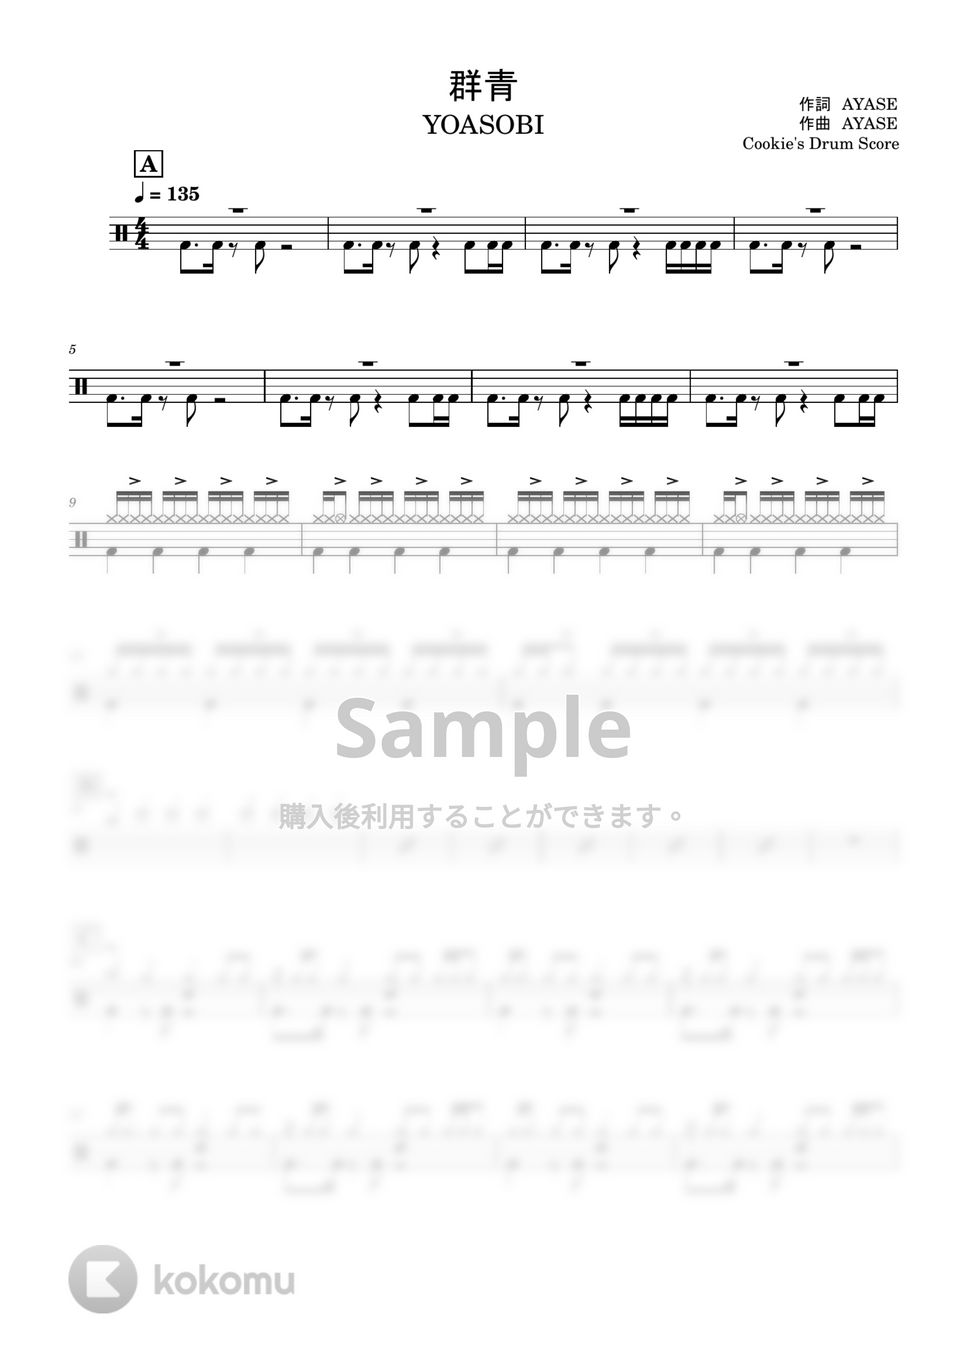 YOASOBI - 群青 by Cookie's Drum Score